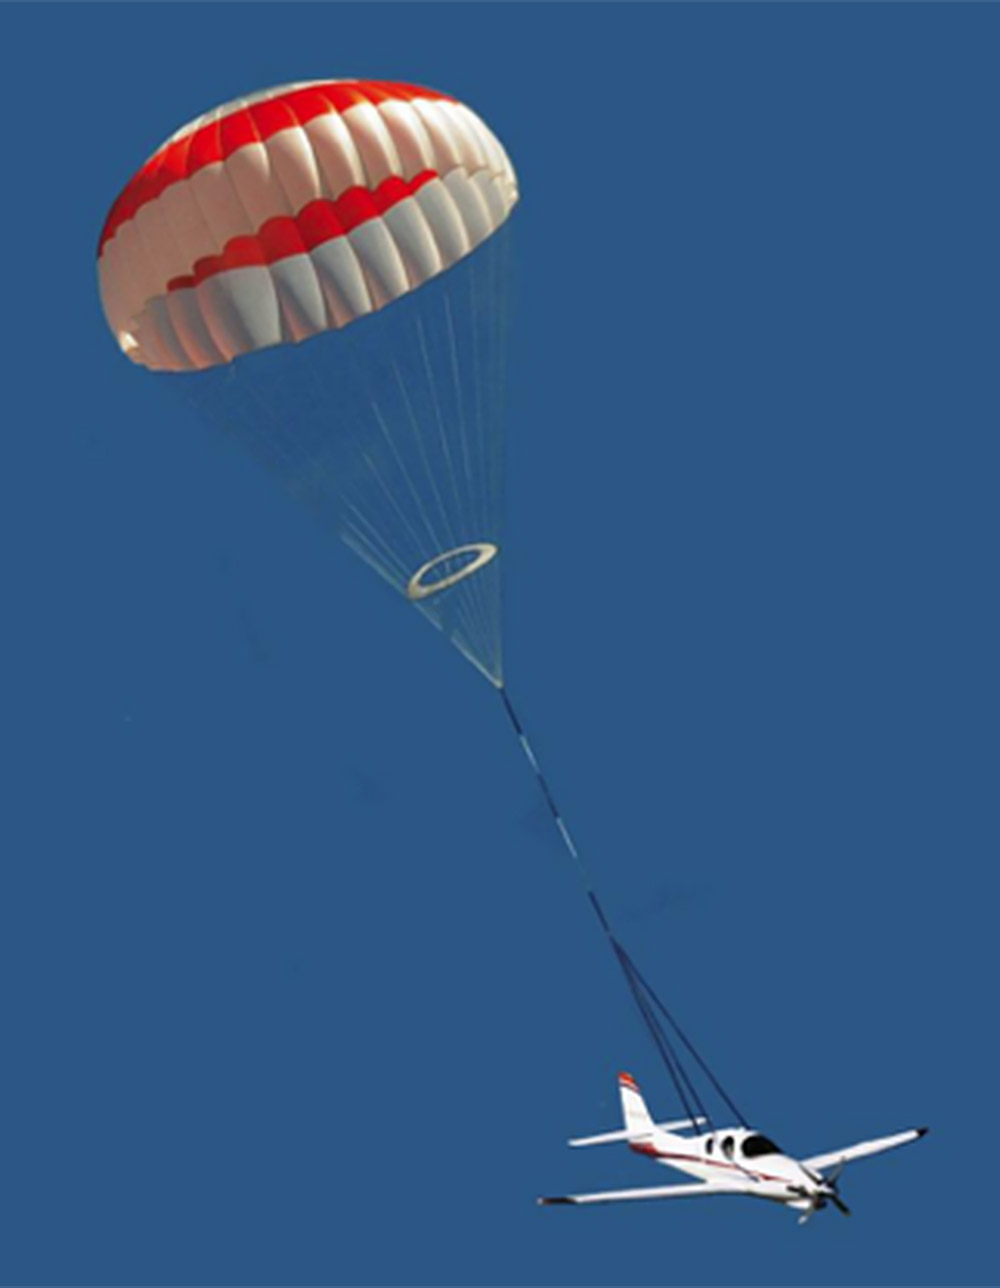 Lancair Mako aircraft will have a BRS Aerospace whole aircraft parachute option. Photo courtesy of BRS Aerospace.